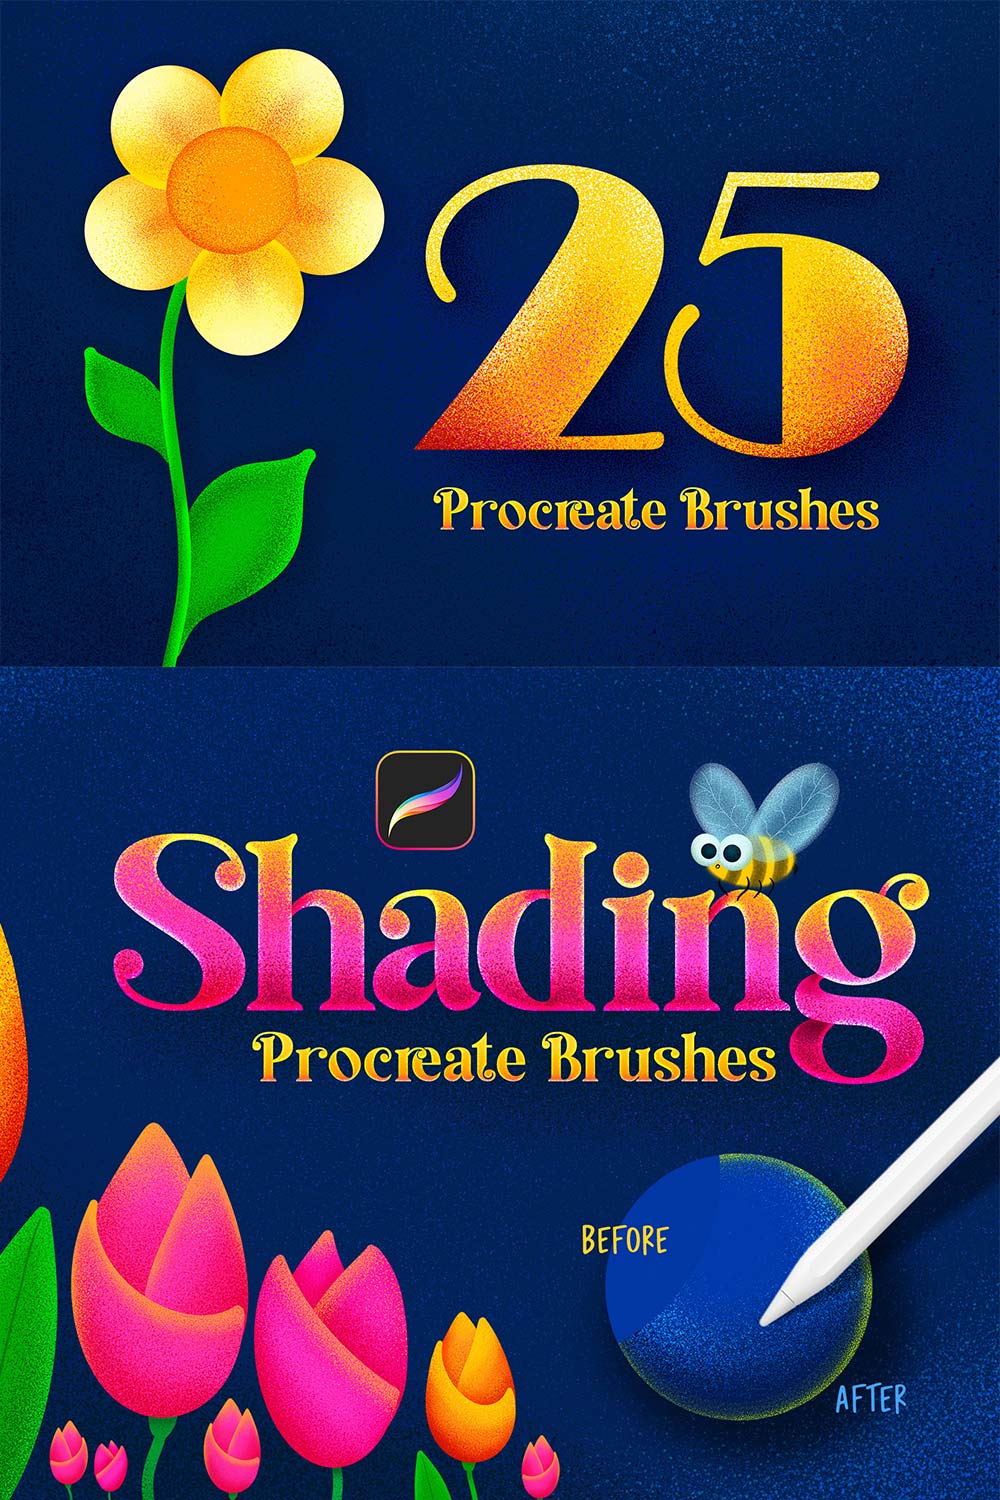 Shading Procreate Brushes pinterest preview image.